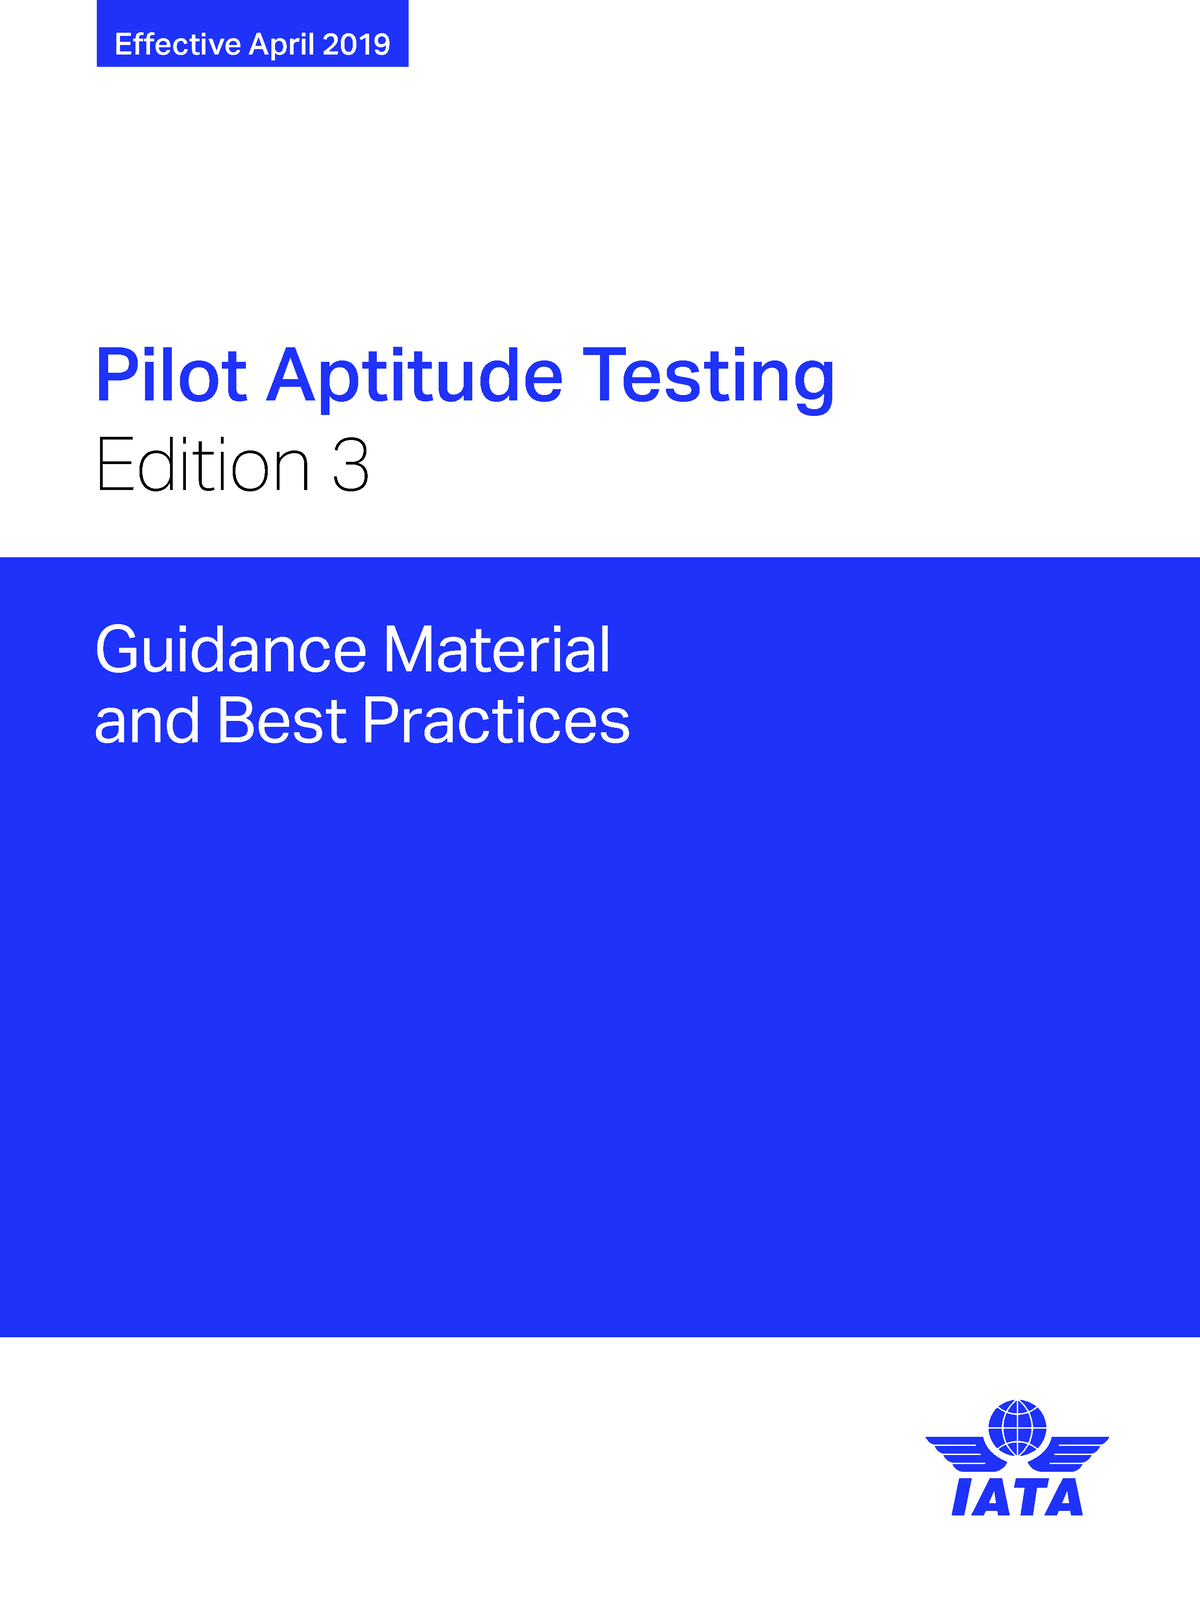 pilot-aptitude-testing-guide-pilot-aptitude-testing-edition-3-guidance-material-and-best